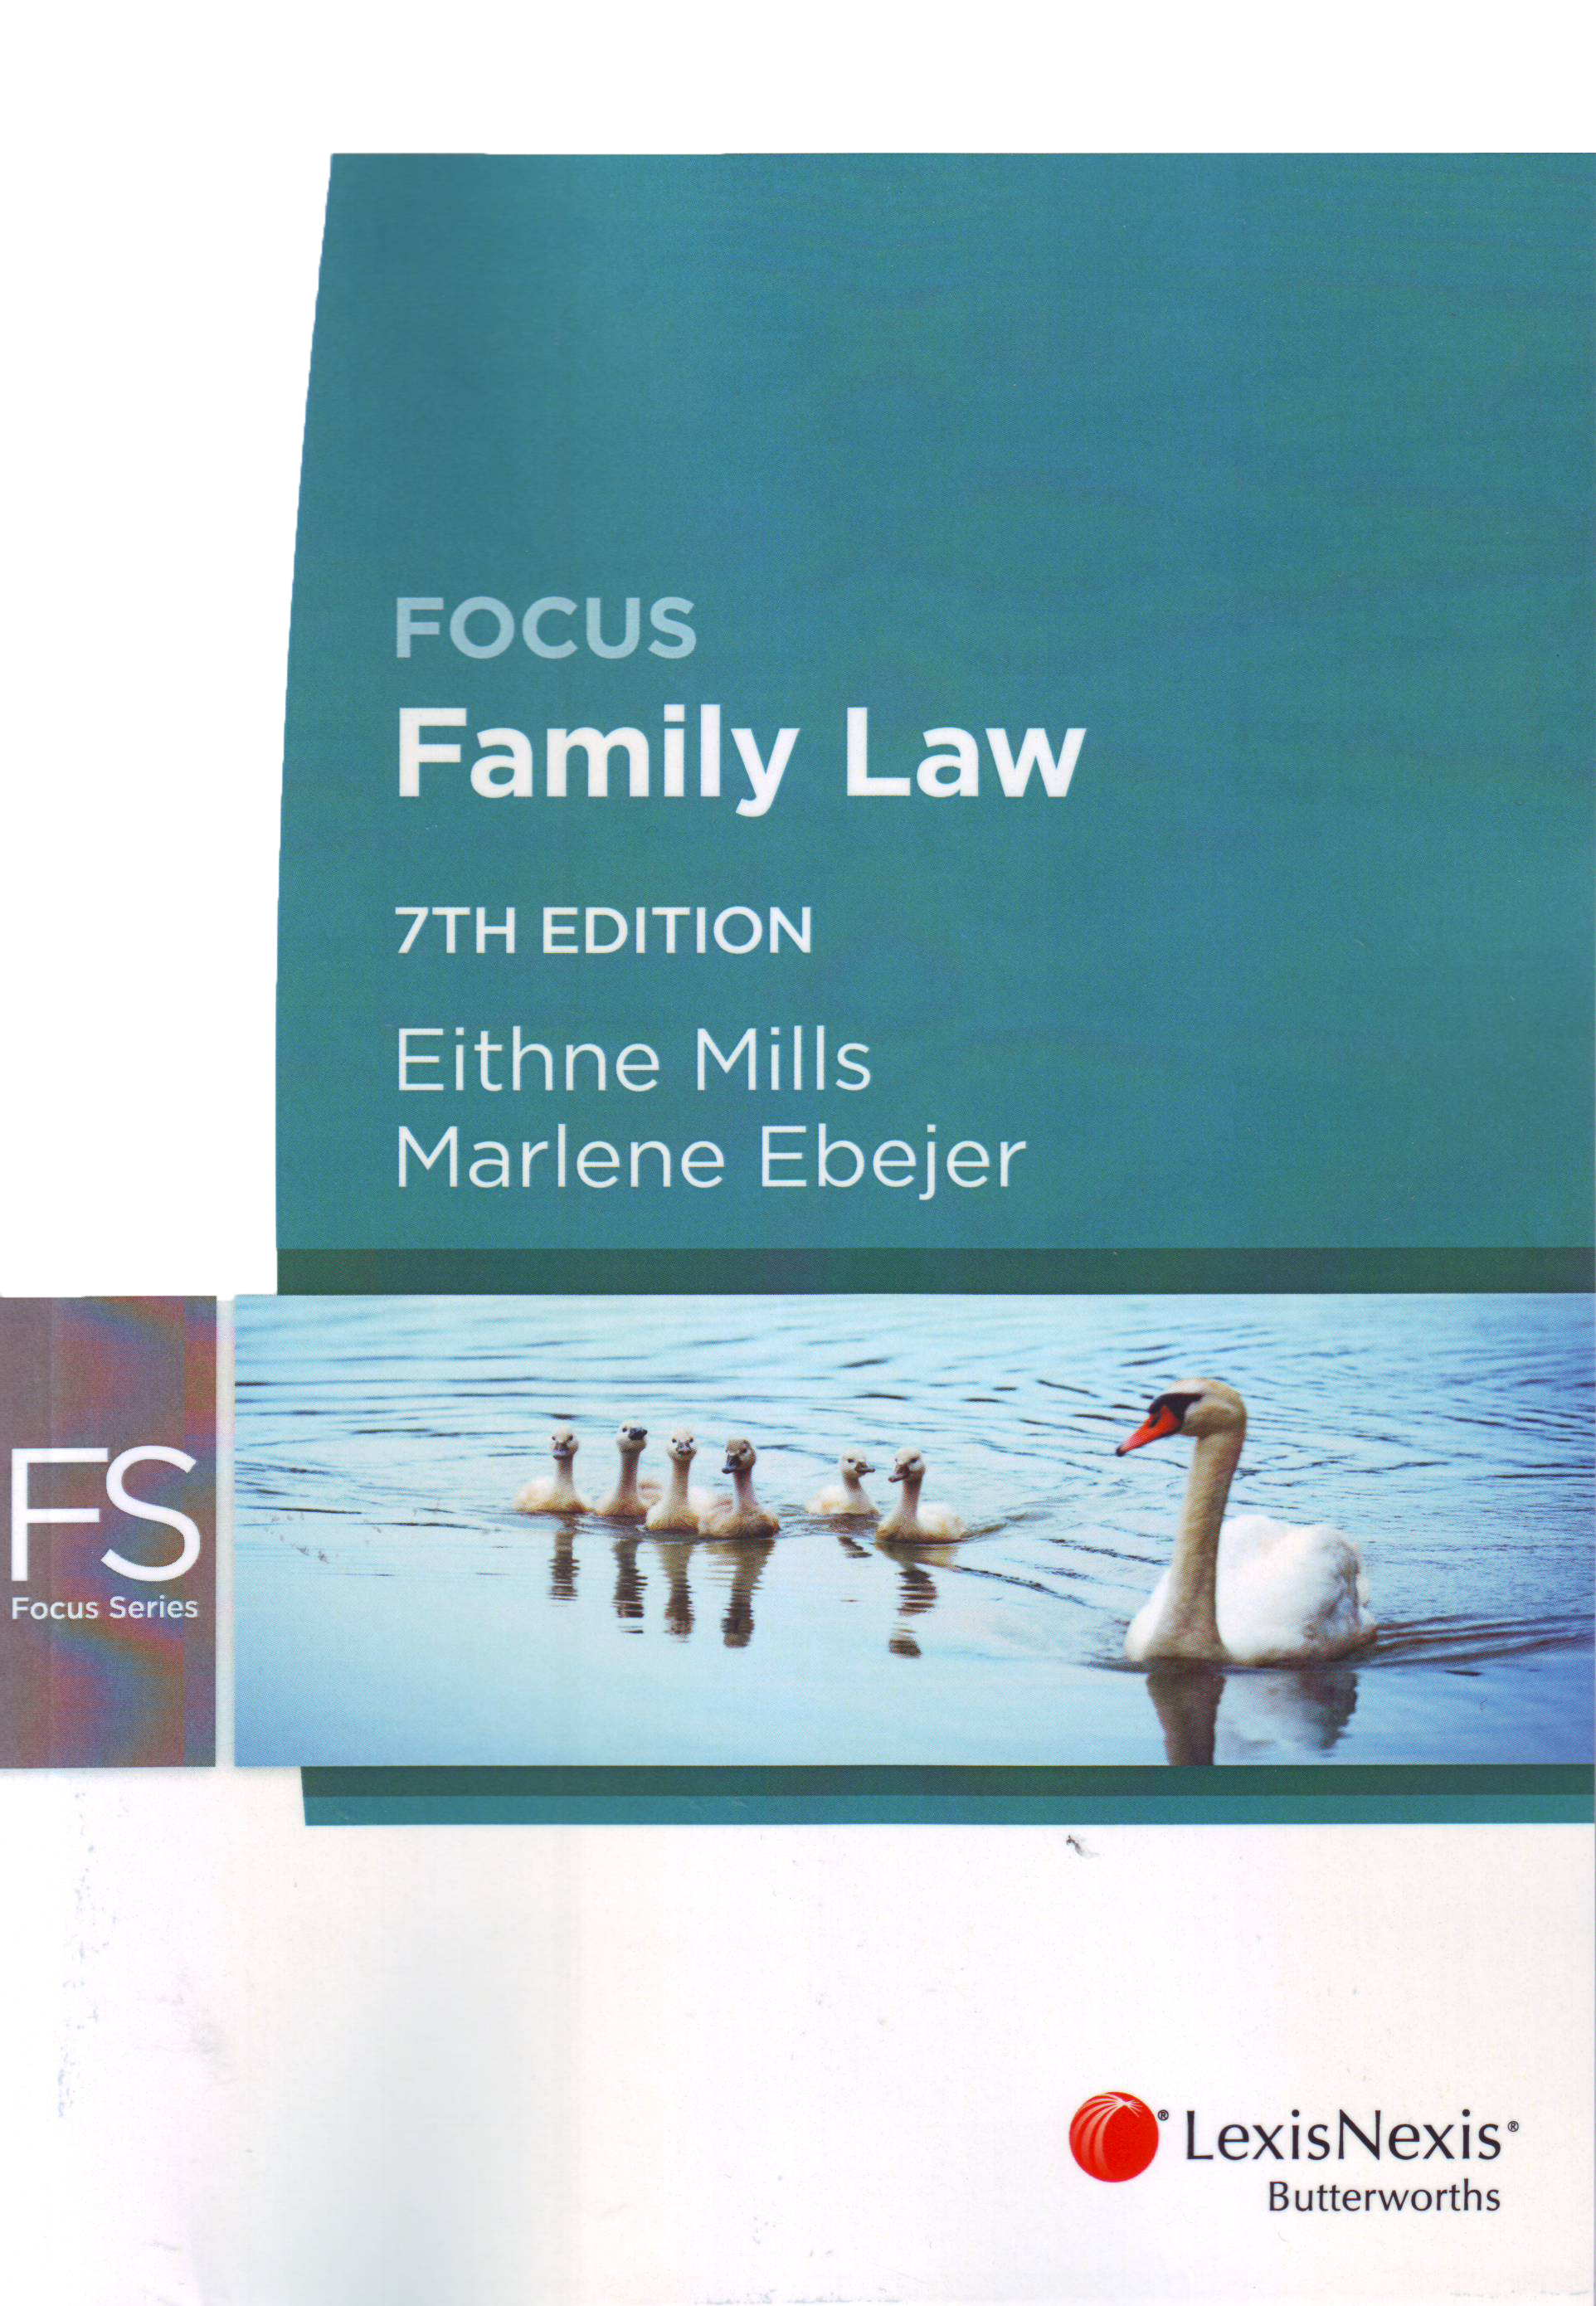 Focus: Family Law e7